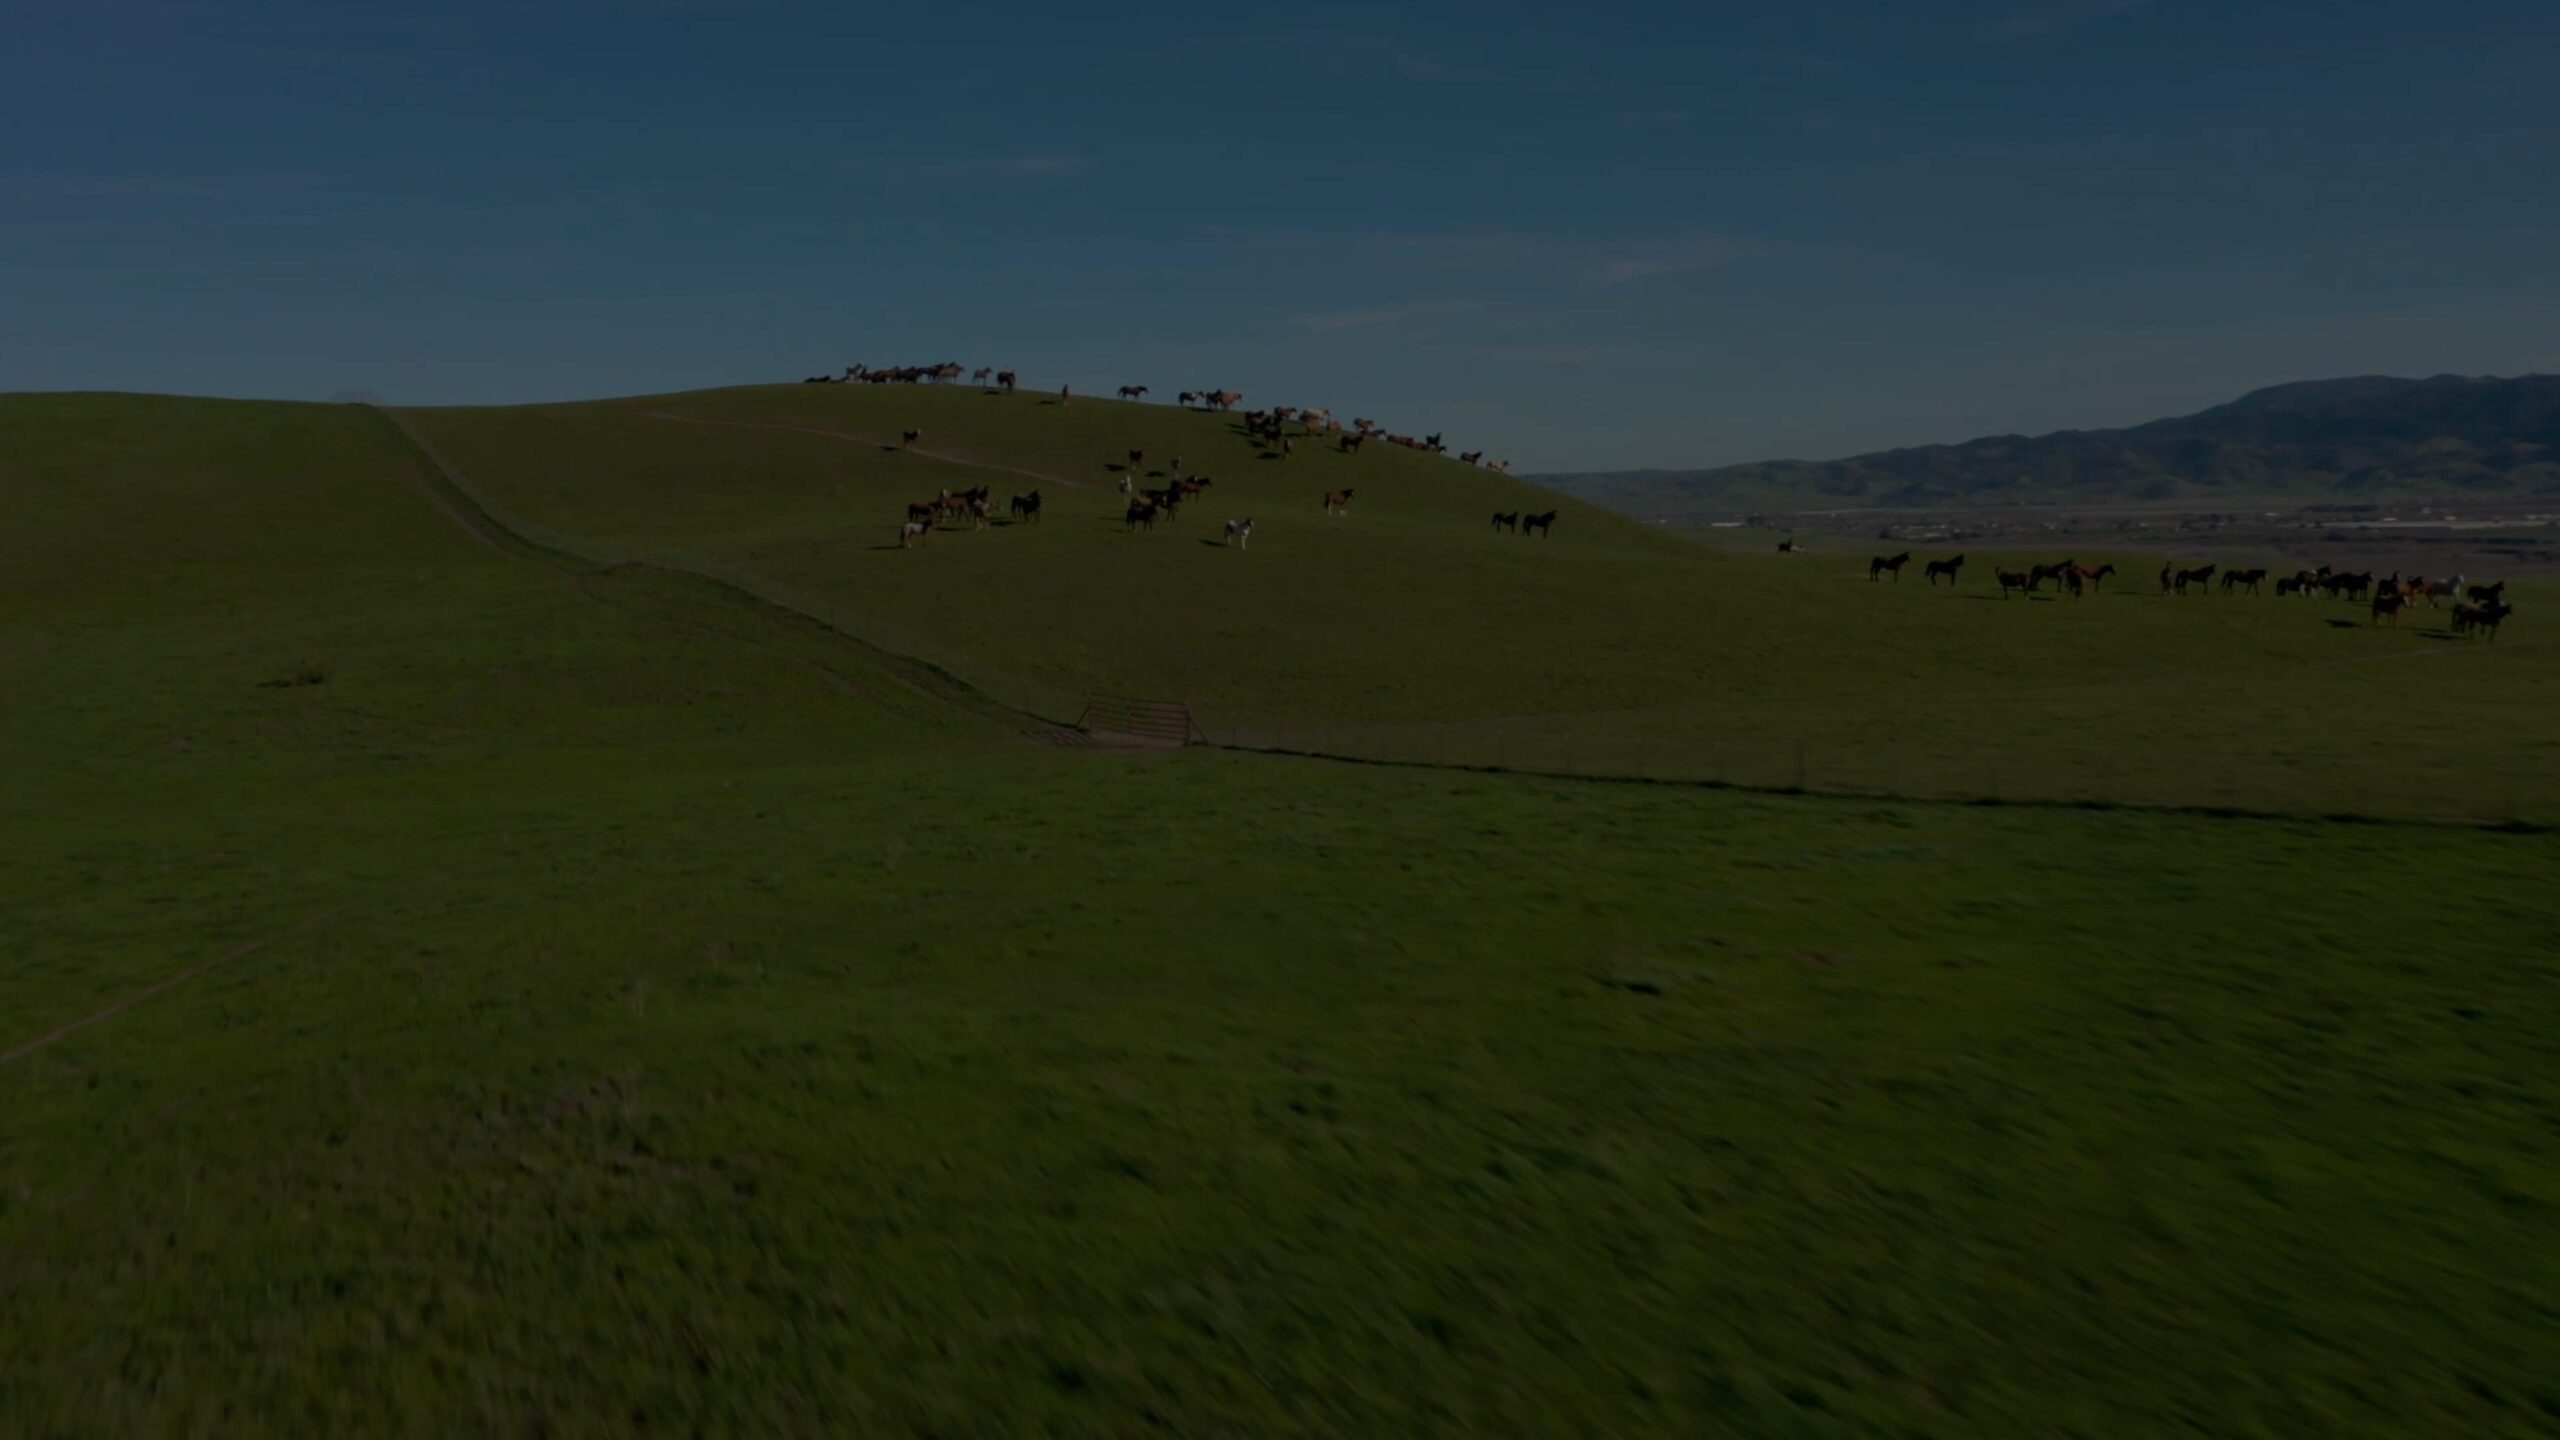 Horses along the horizon of green hill